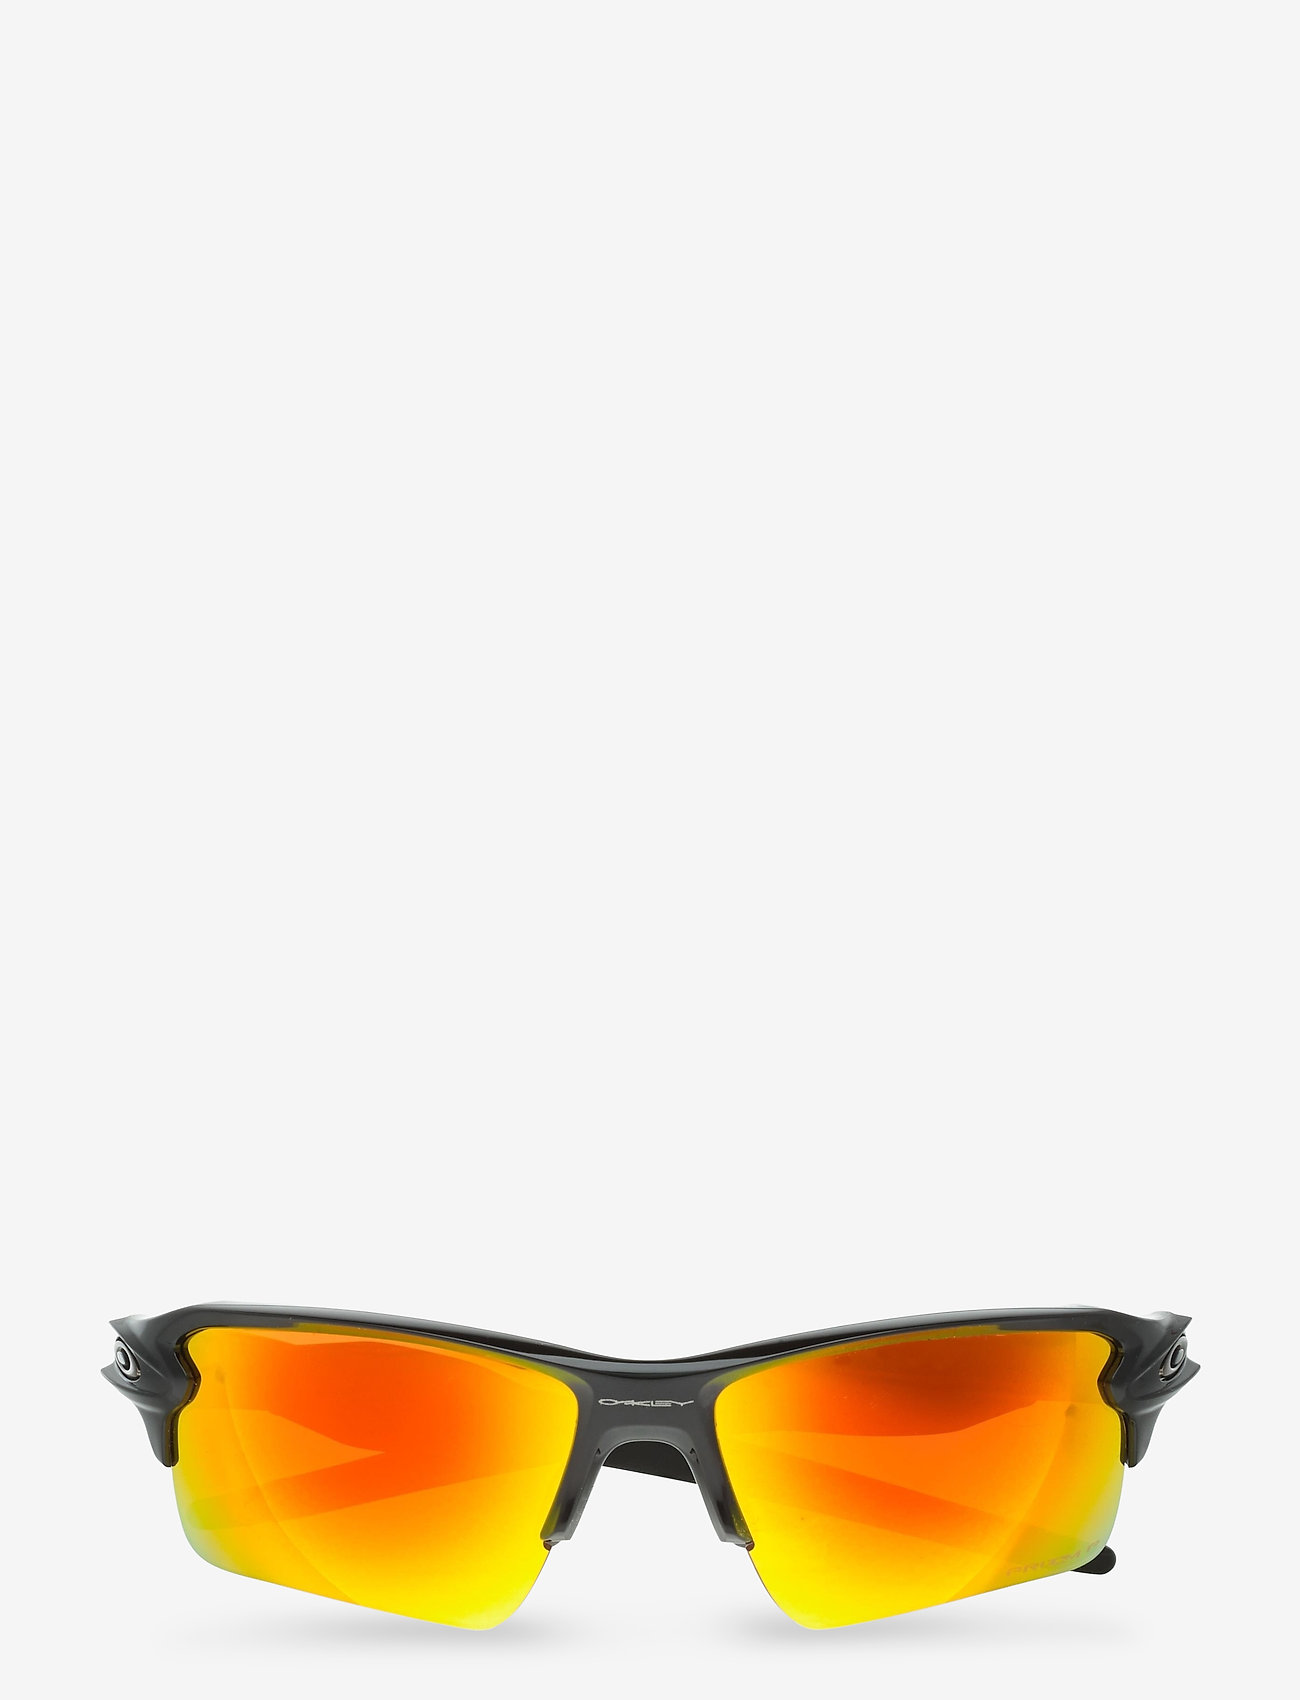 oakley flak 2.0 xl prizm polarized sunglasses